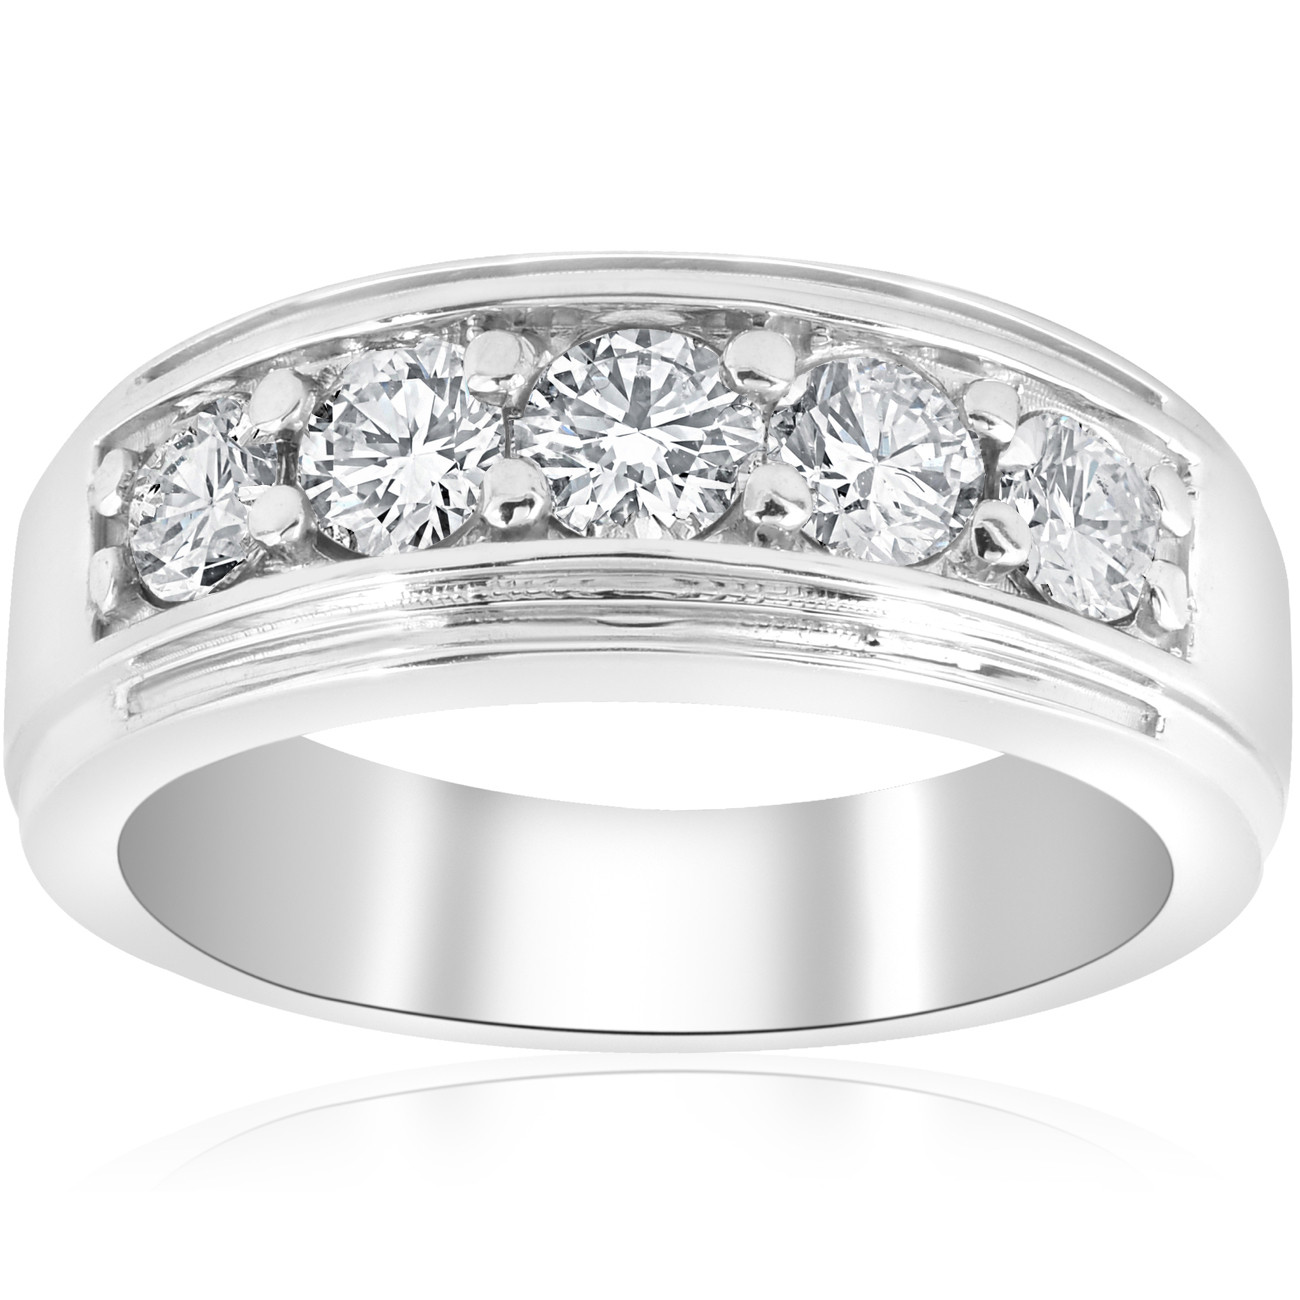 Mens Diamond Engagement Rings
 Channel Set Men s Wedding Ring Band SI G 1 Ct Diamond 14K